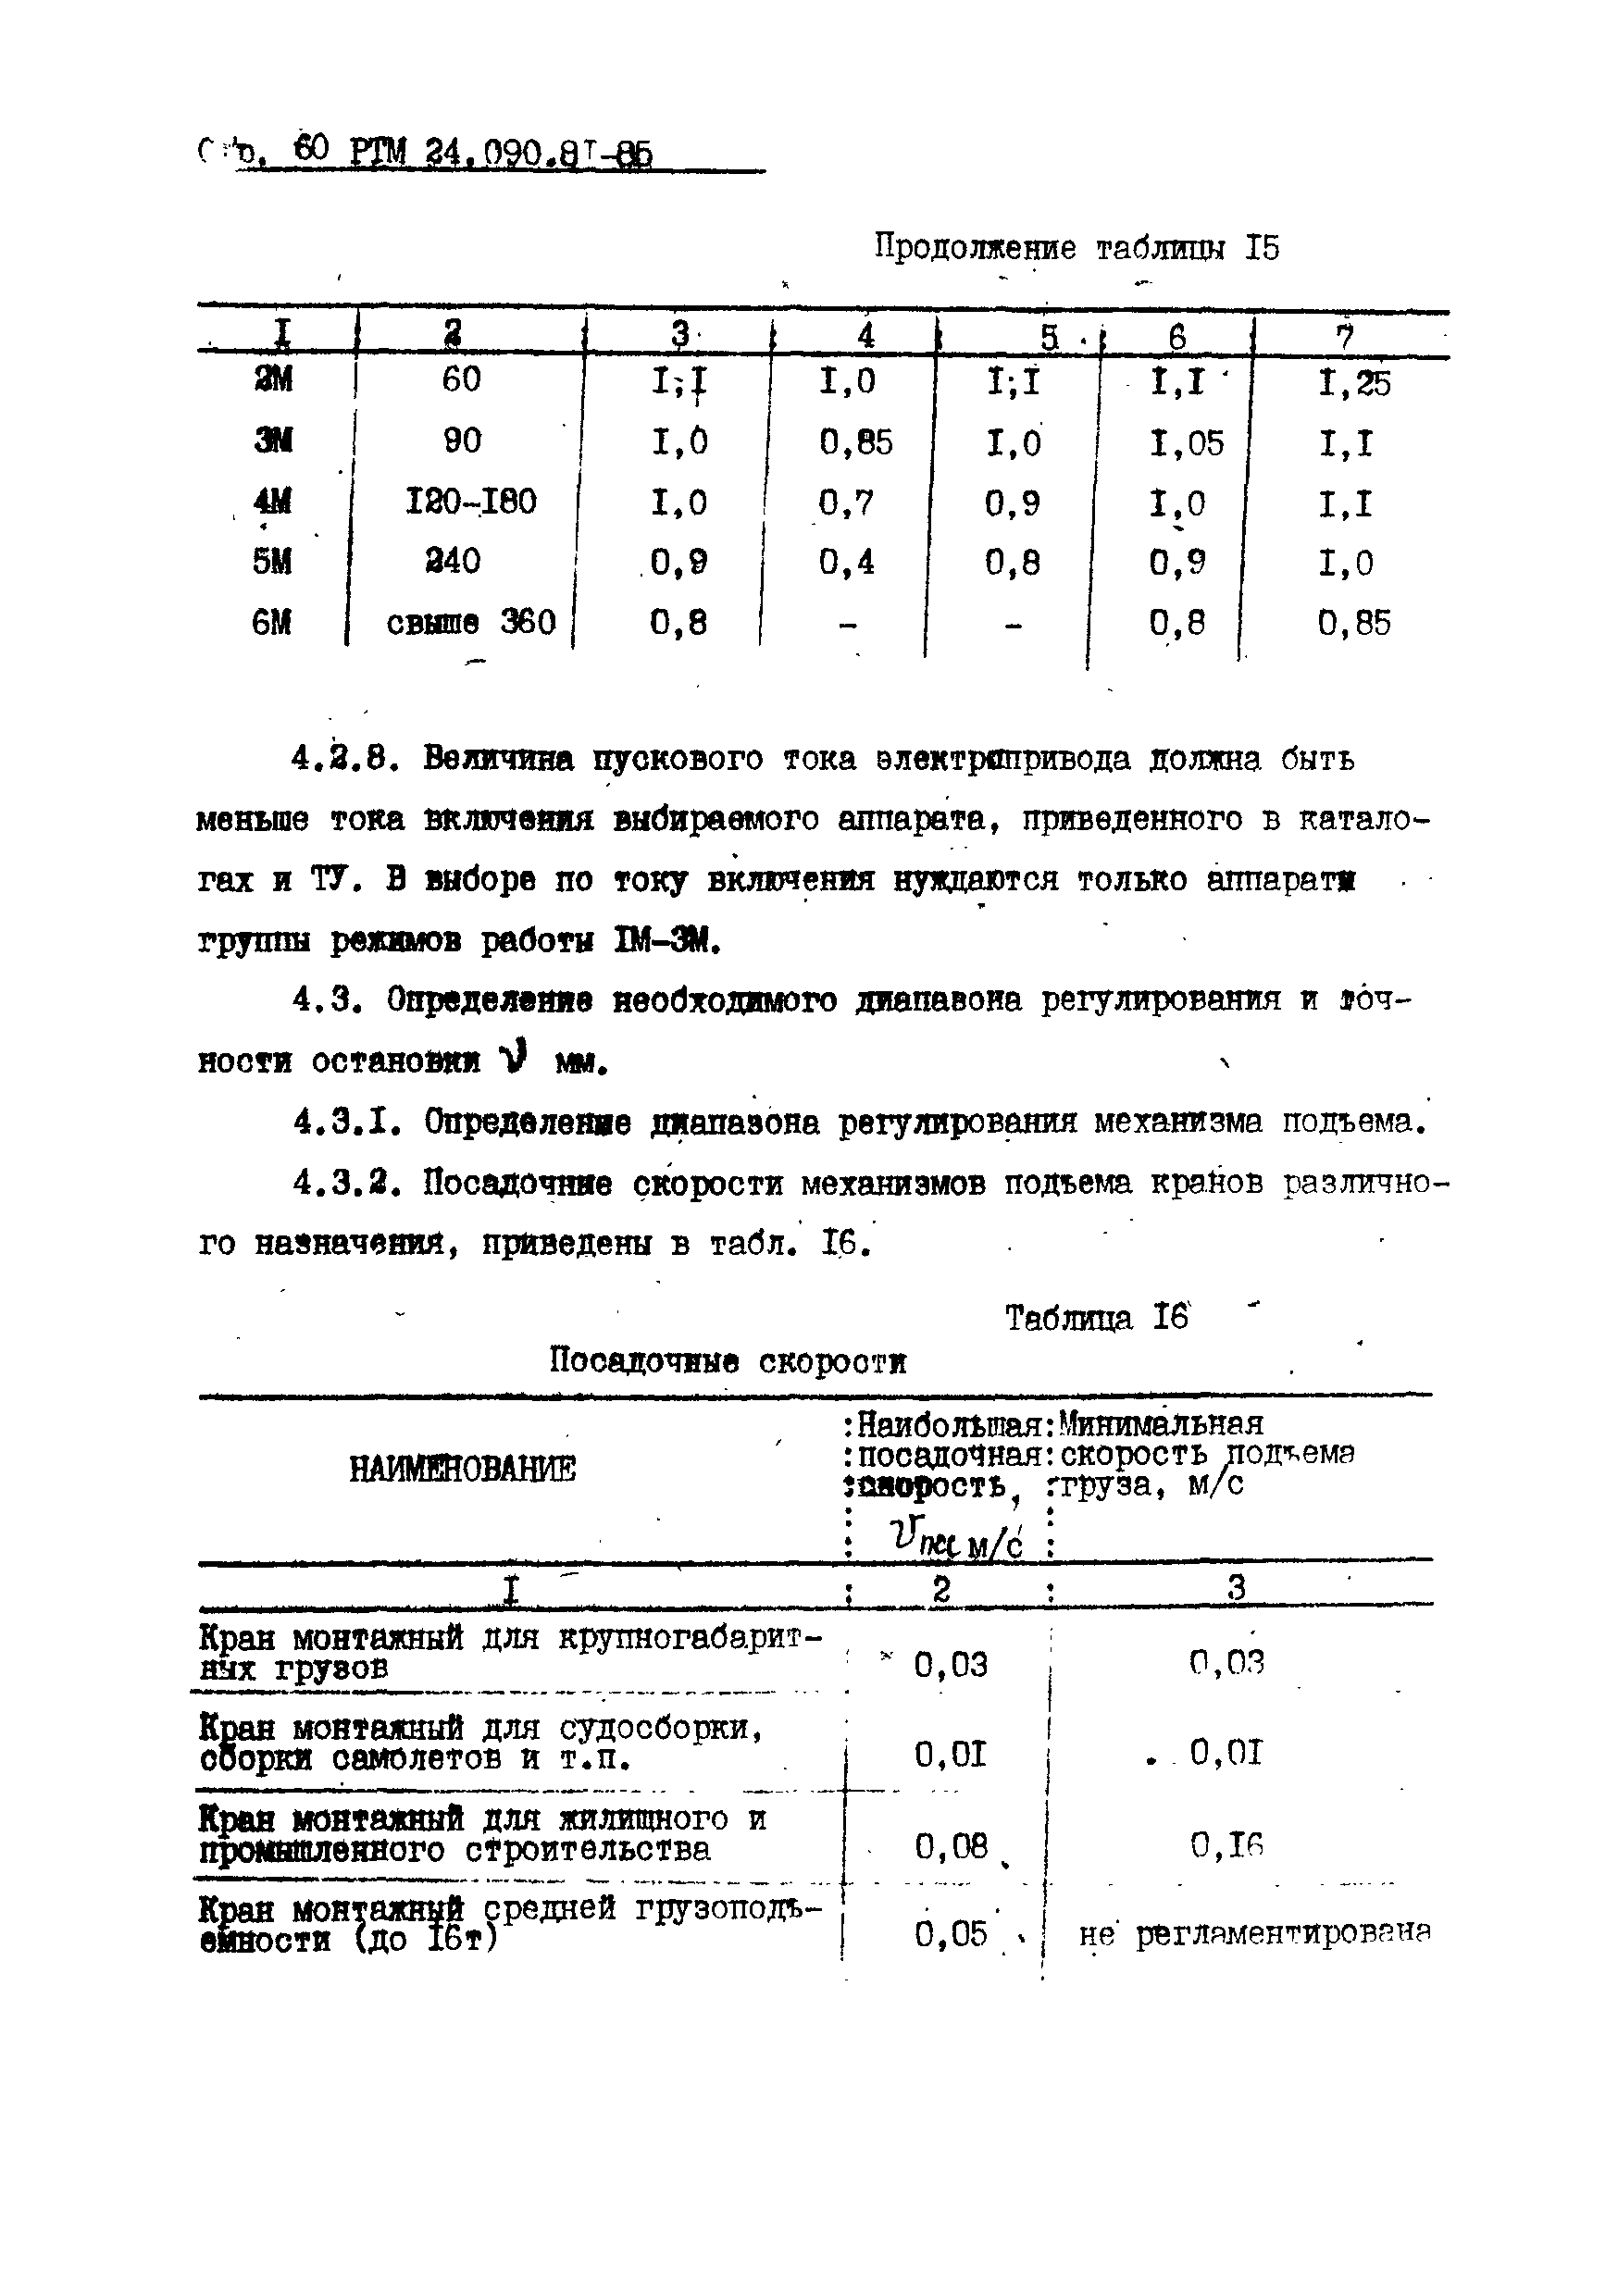 РТМ 24.090.81-85